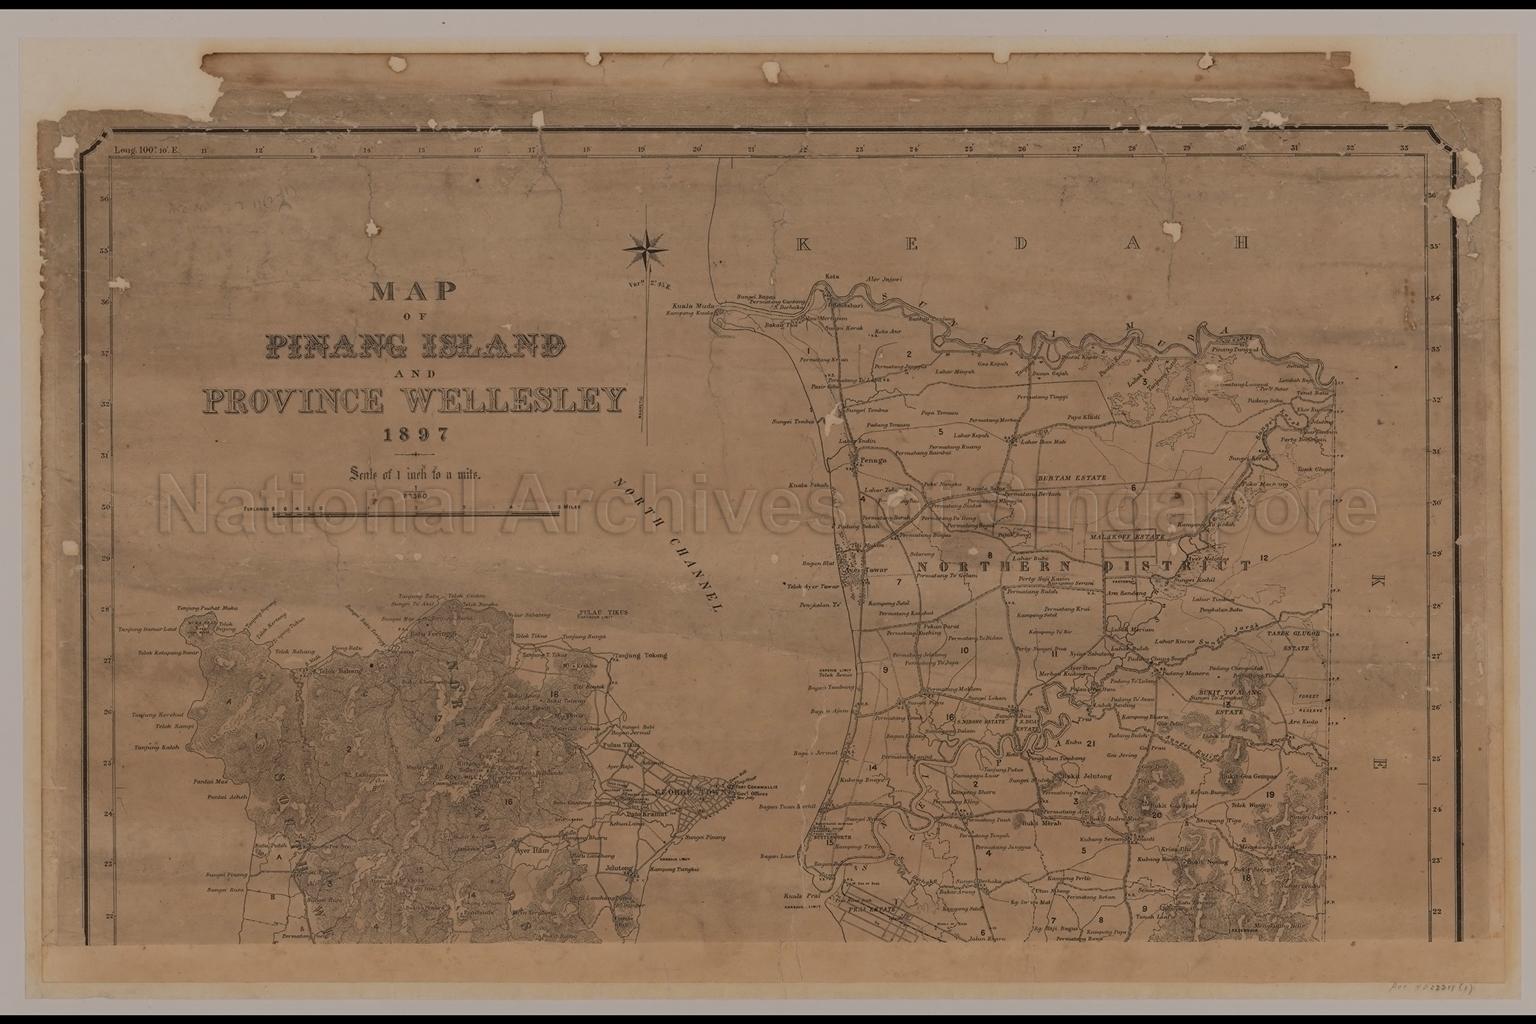 Map of Pinang Island and Province Wellesley,1897